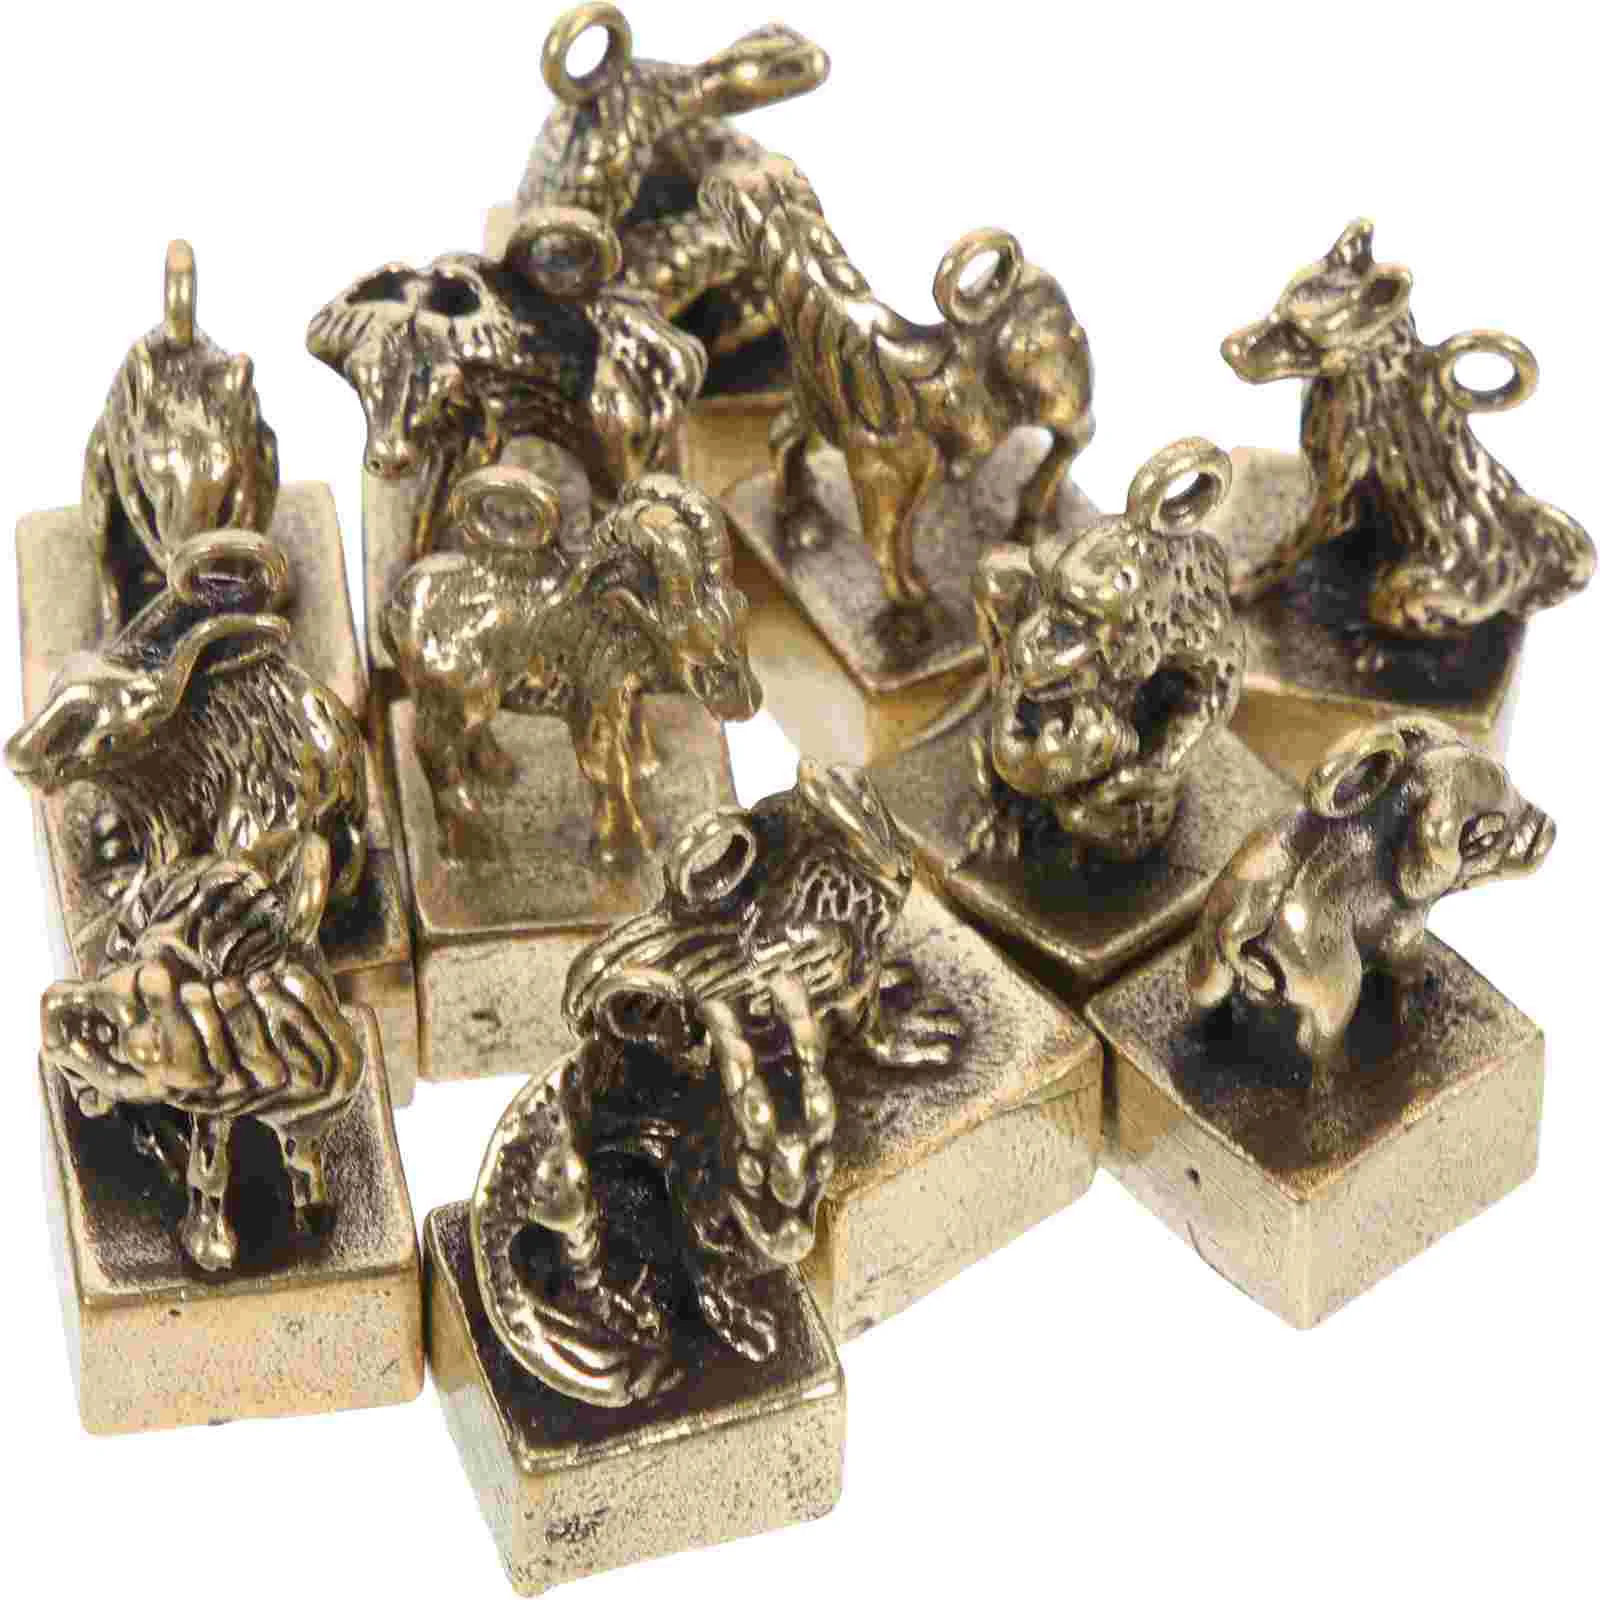 

12 Pcs Zodiac Seals Household Decor Chinese Animals Decoration Sculpture Vintage Adornment Brass Figurine Office Retro Style